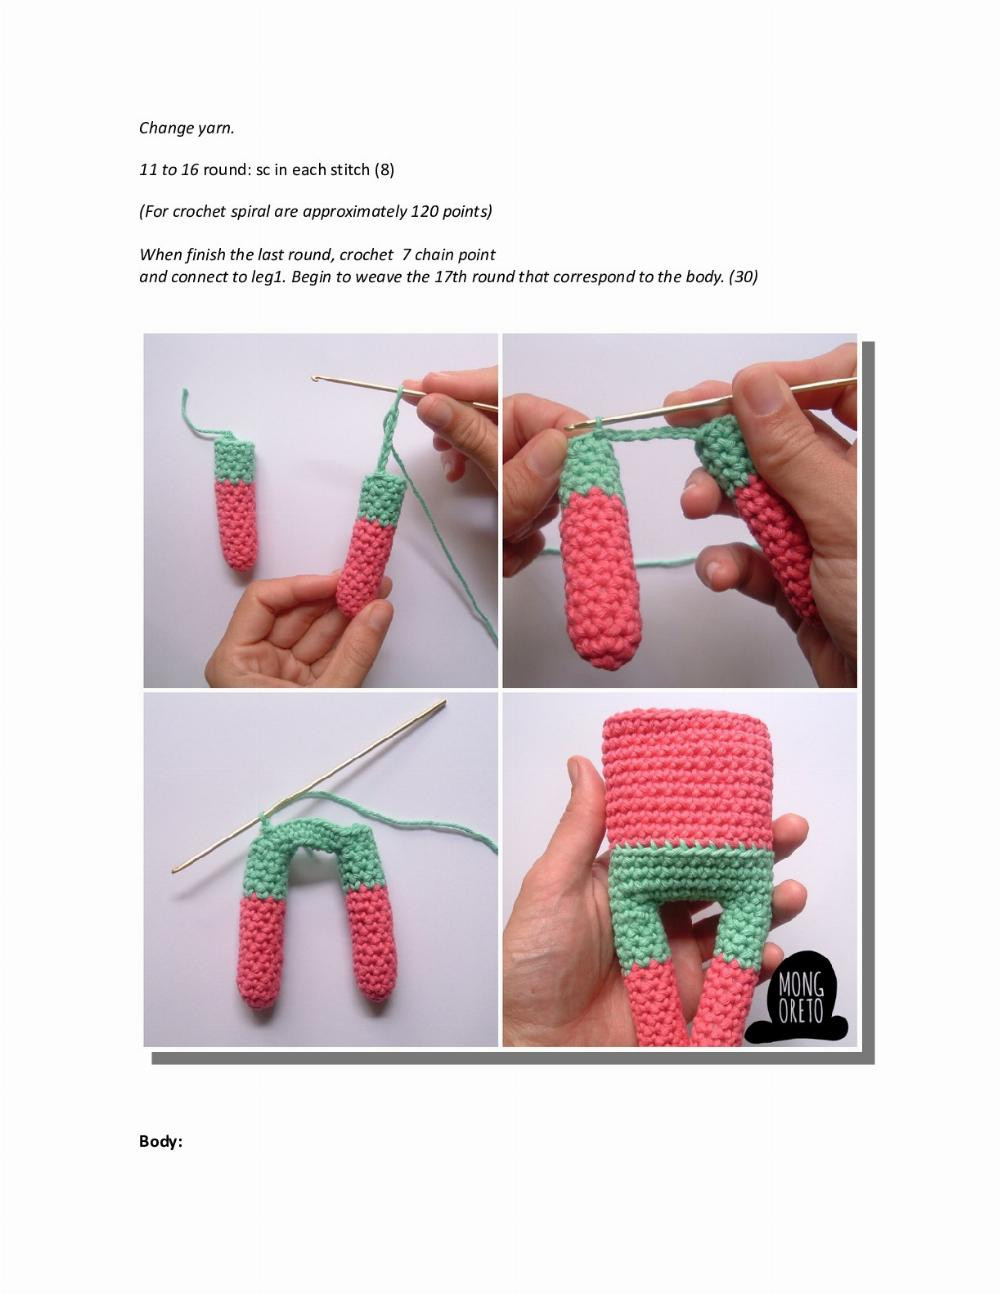 mong oreto crochet pattern